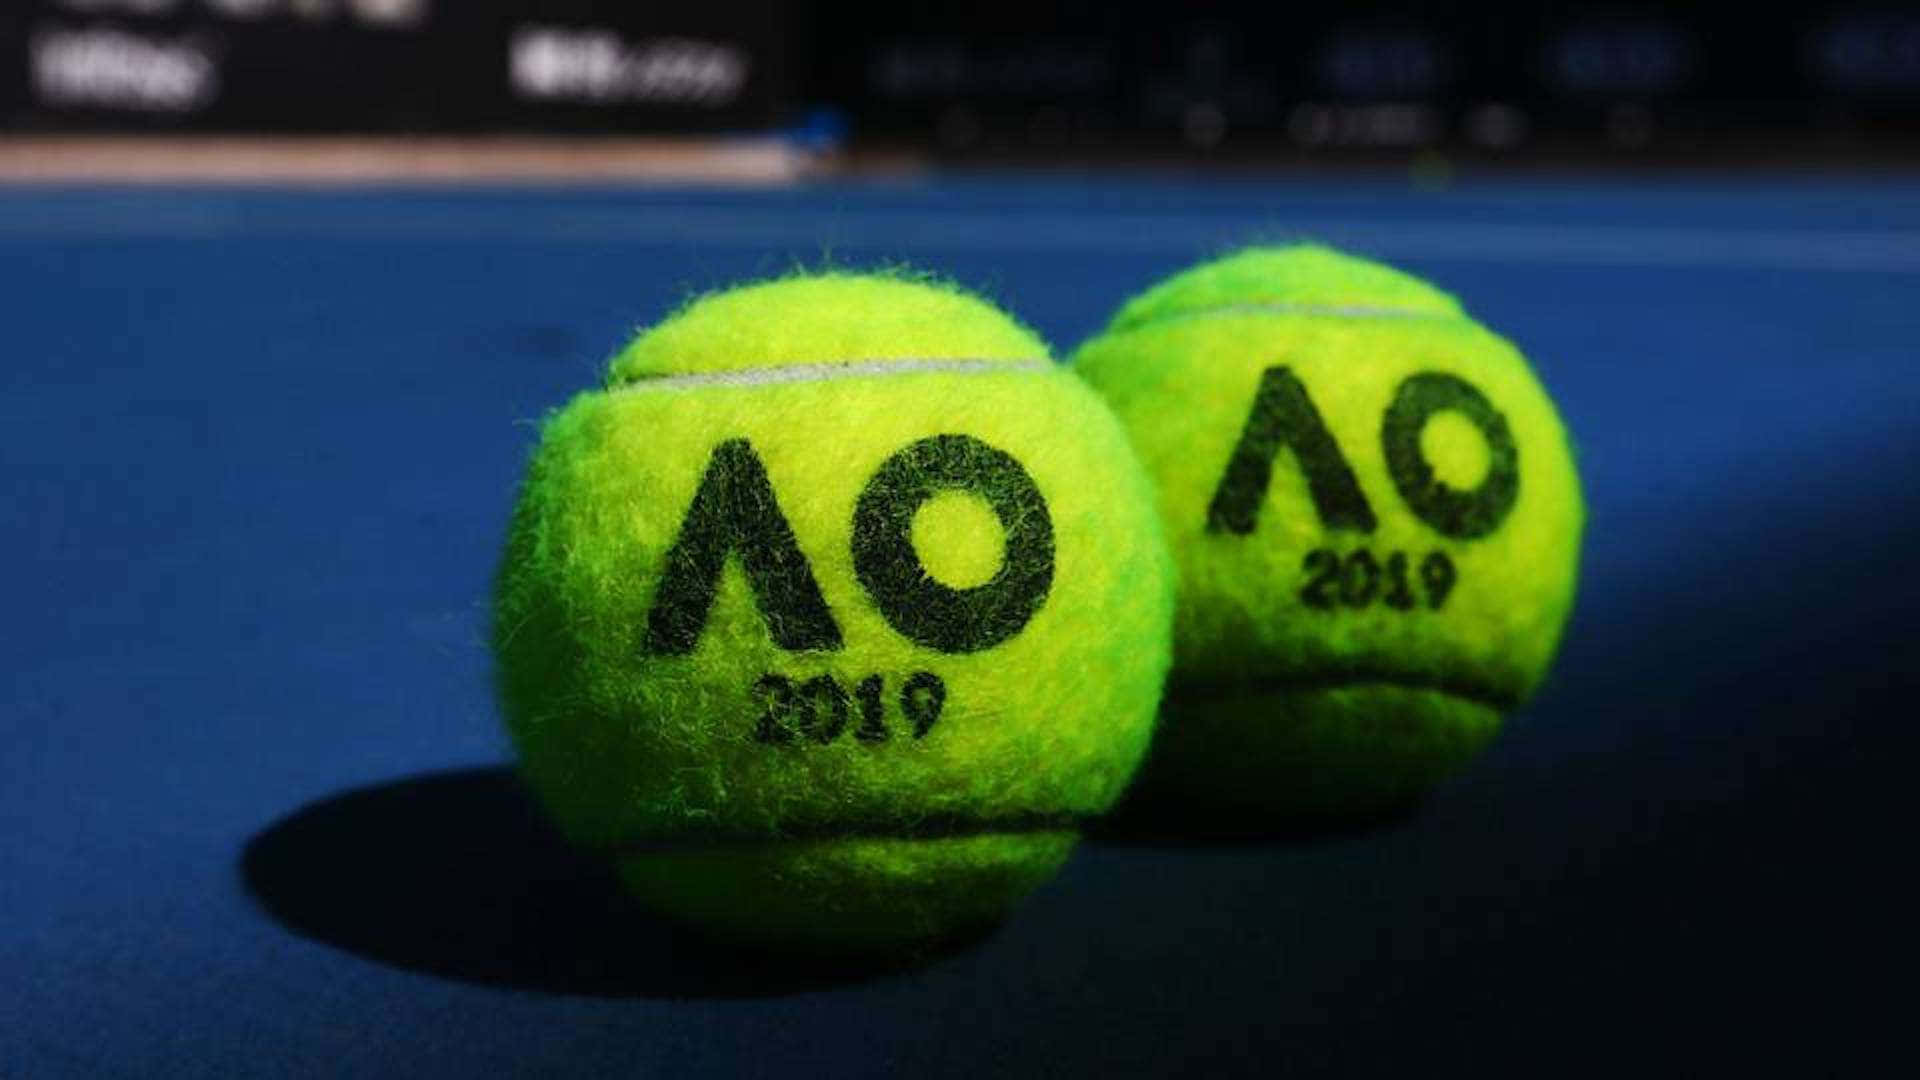 Bienvenidosal Abierto De Australia, Un Evento De Tenis De Élite De Grand Slam.